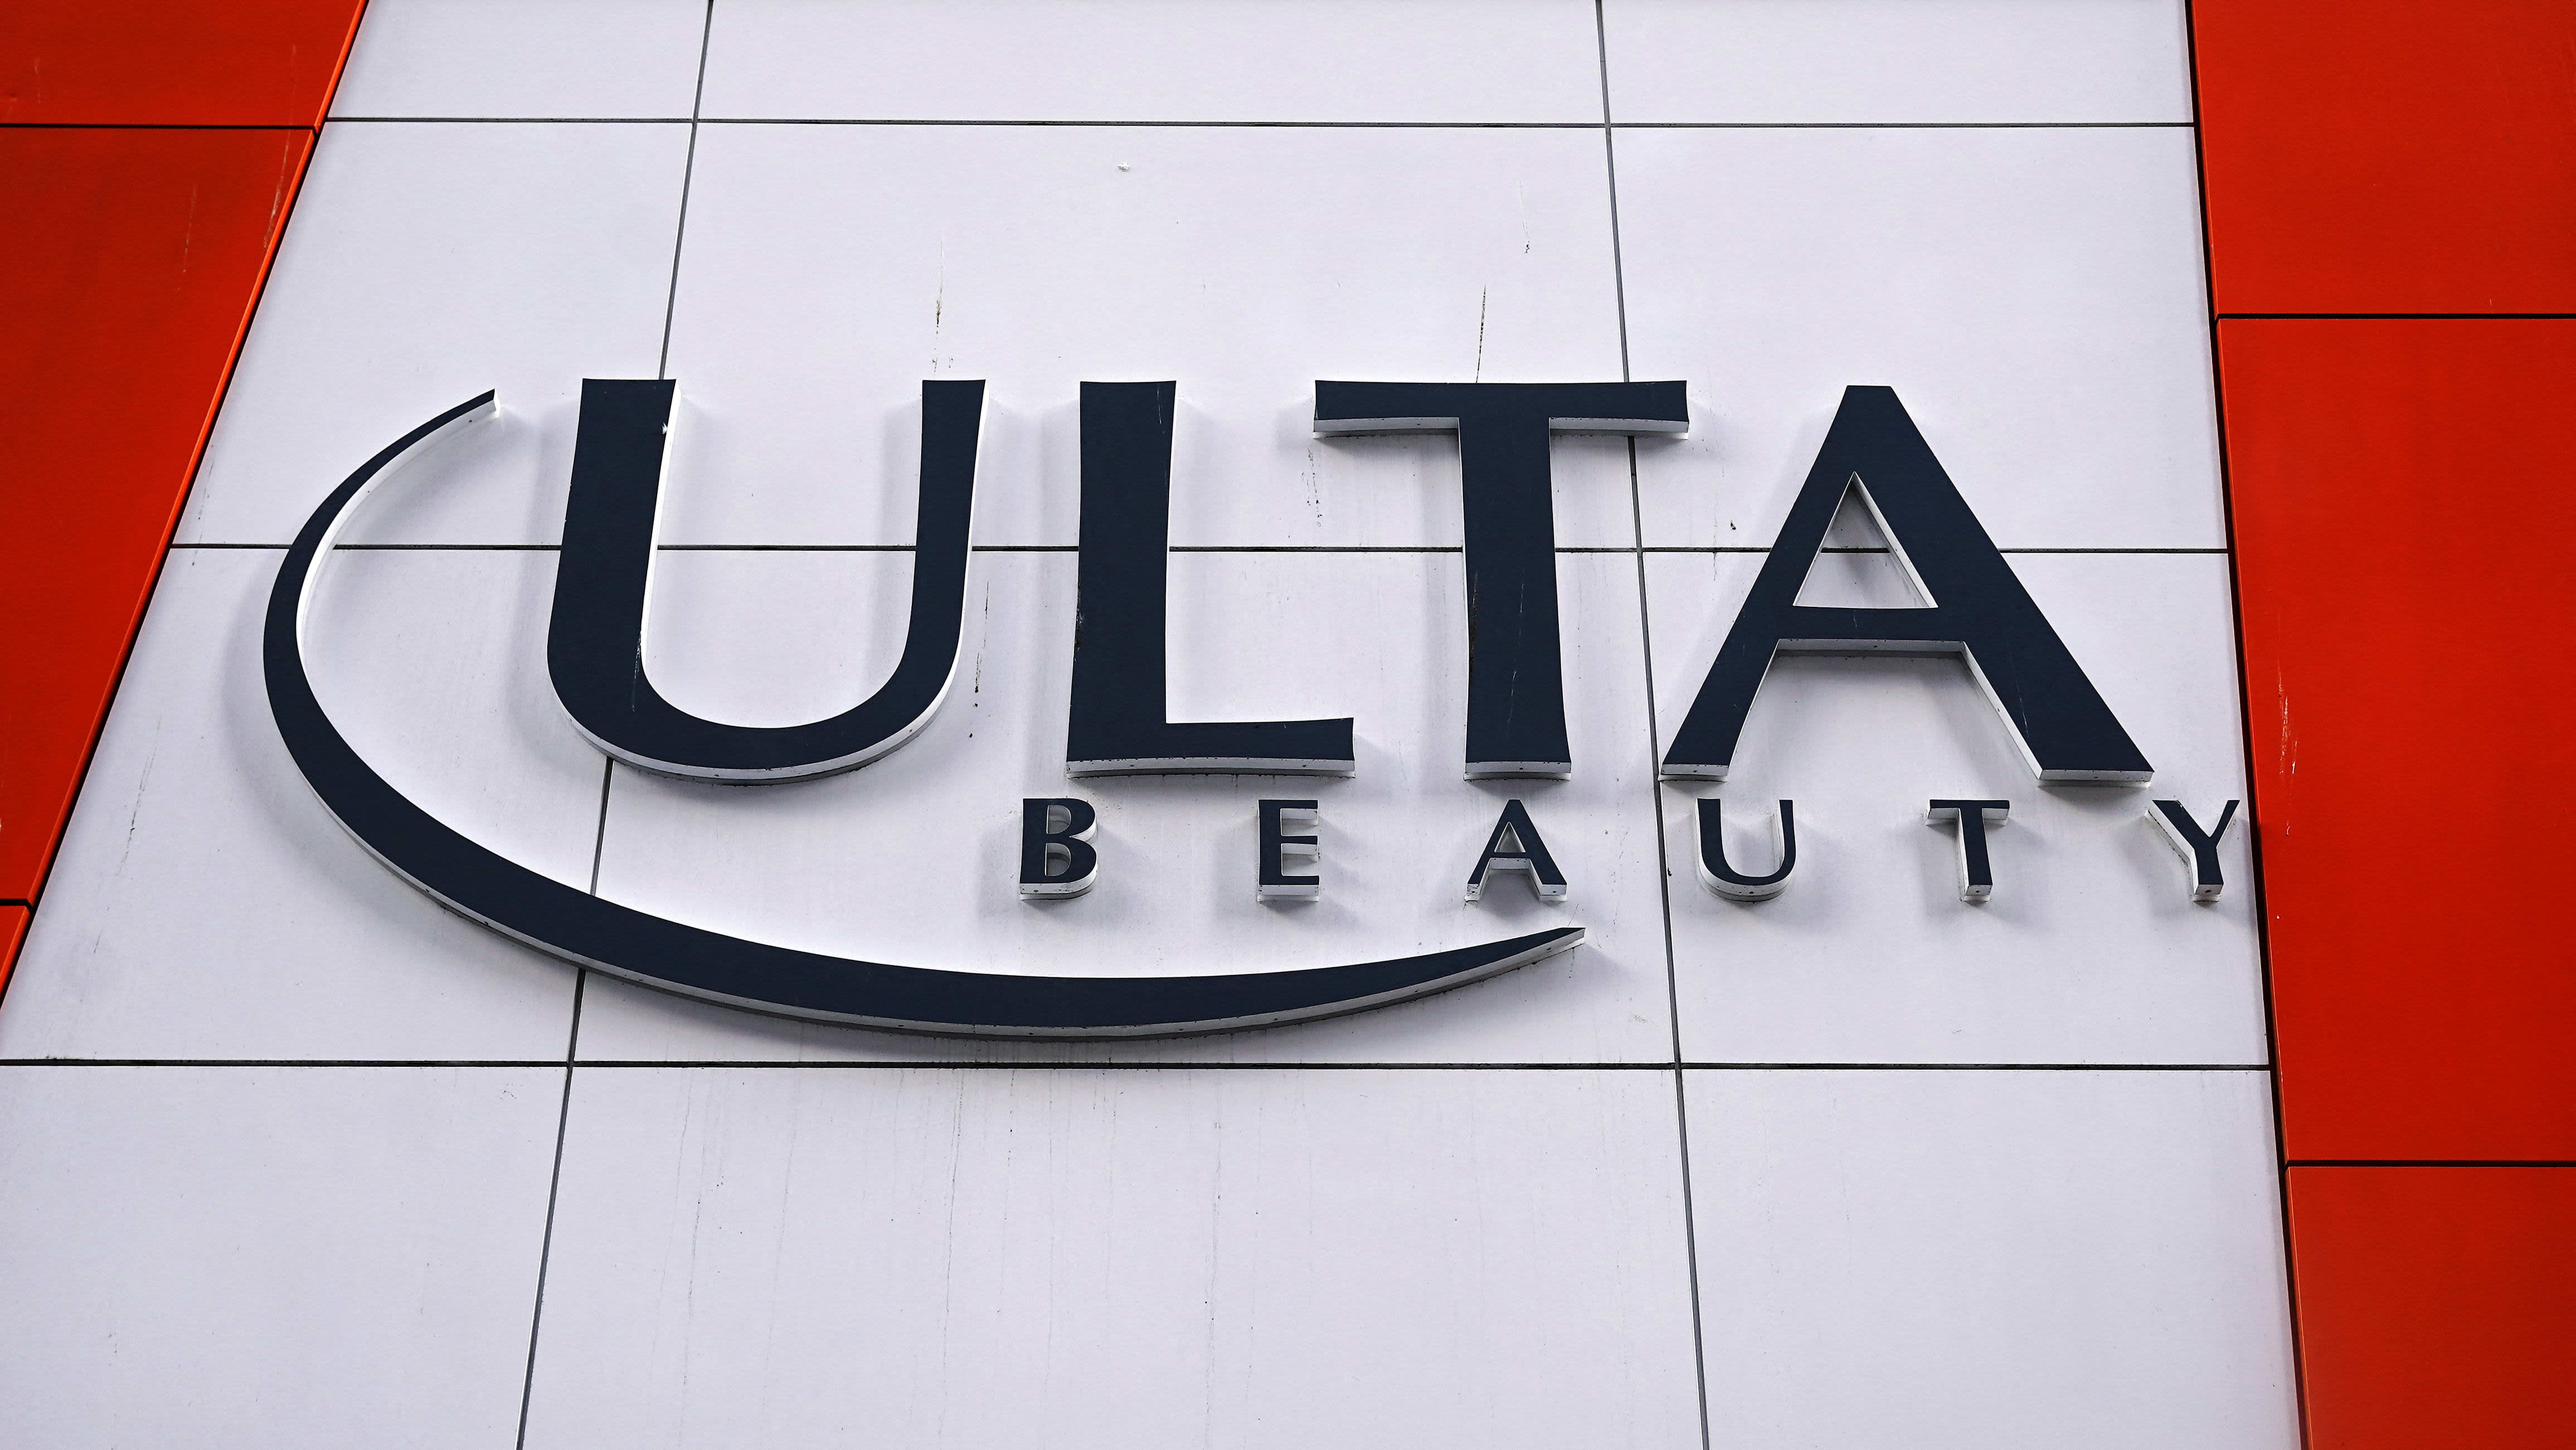 Record sales push Ulta Beauty past $10 billion in 2022 revenue